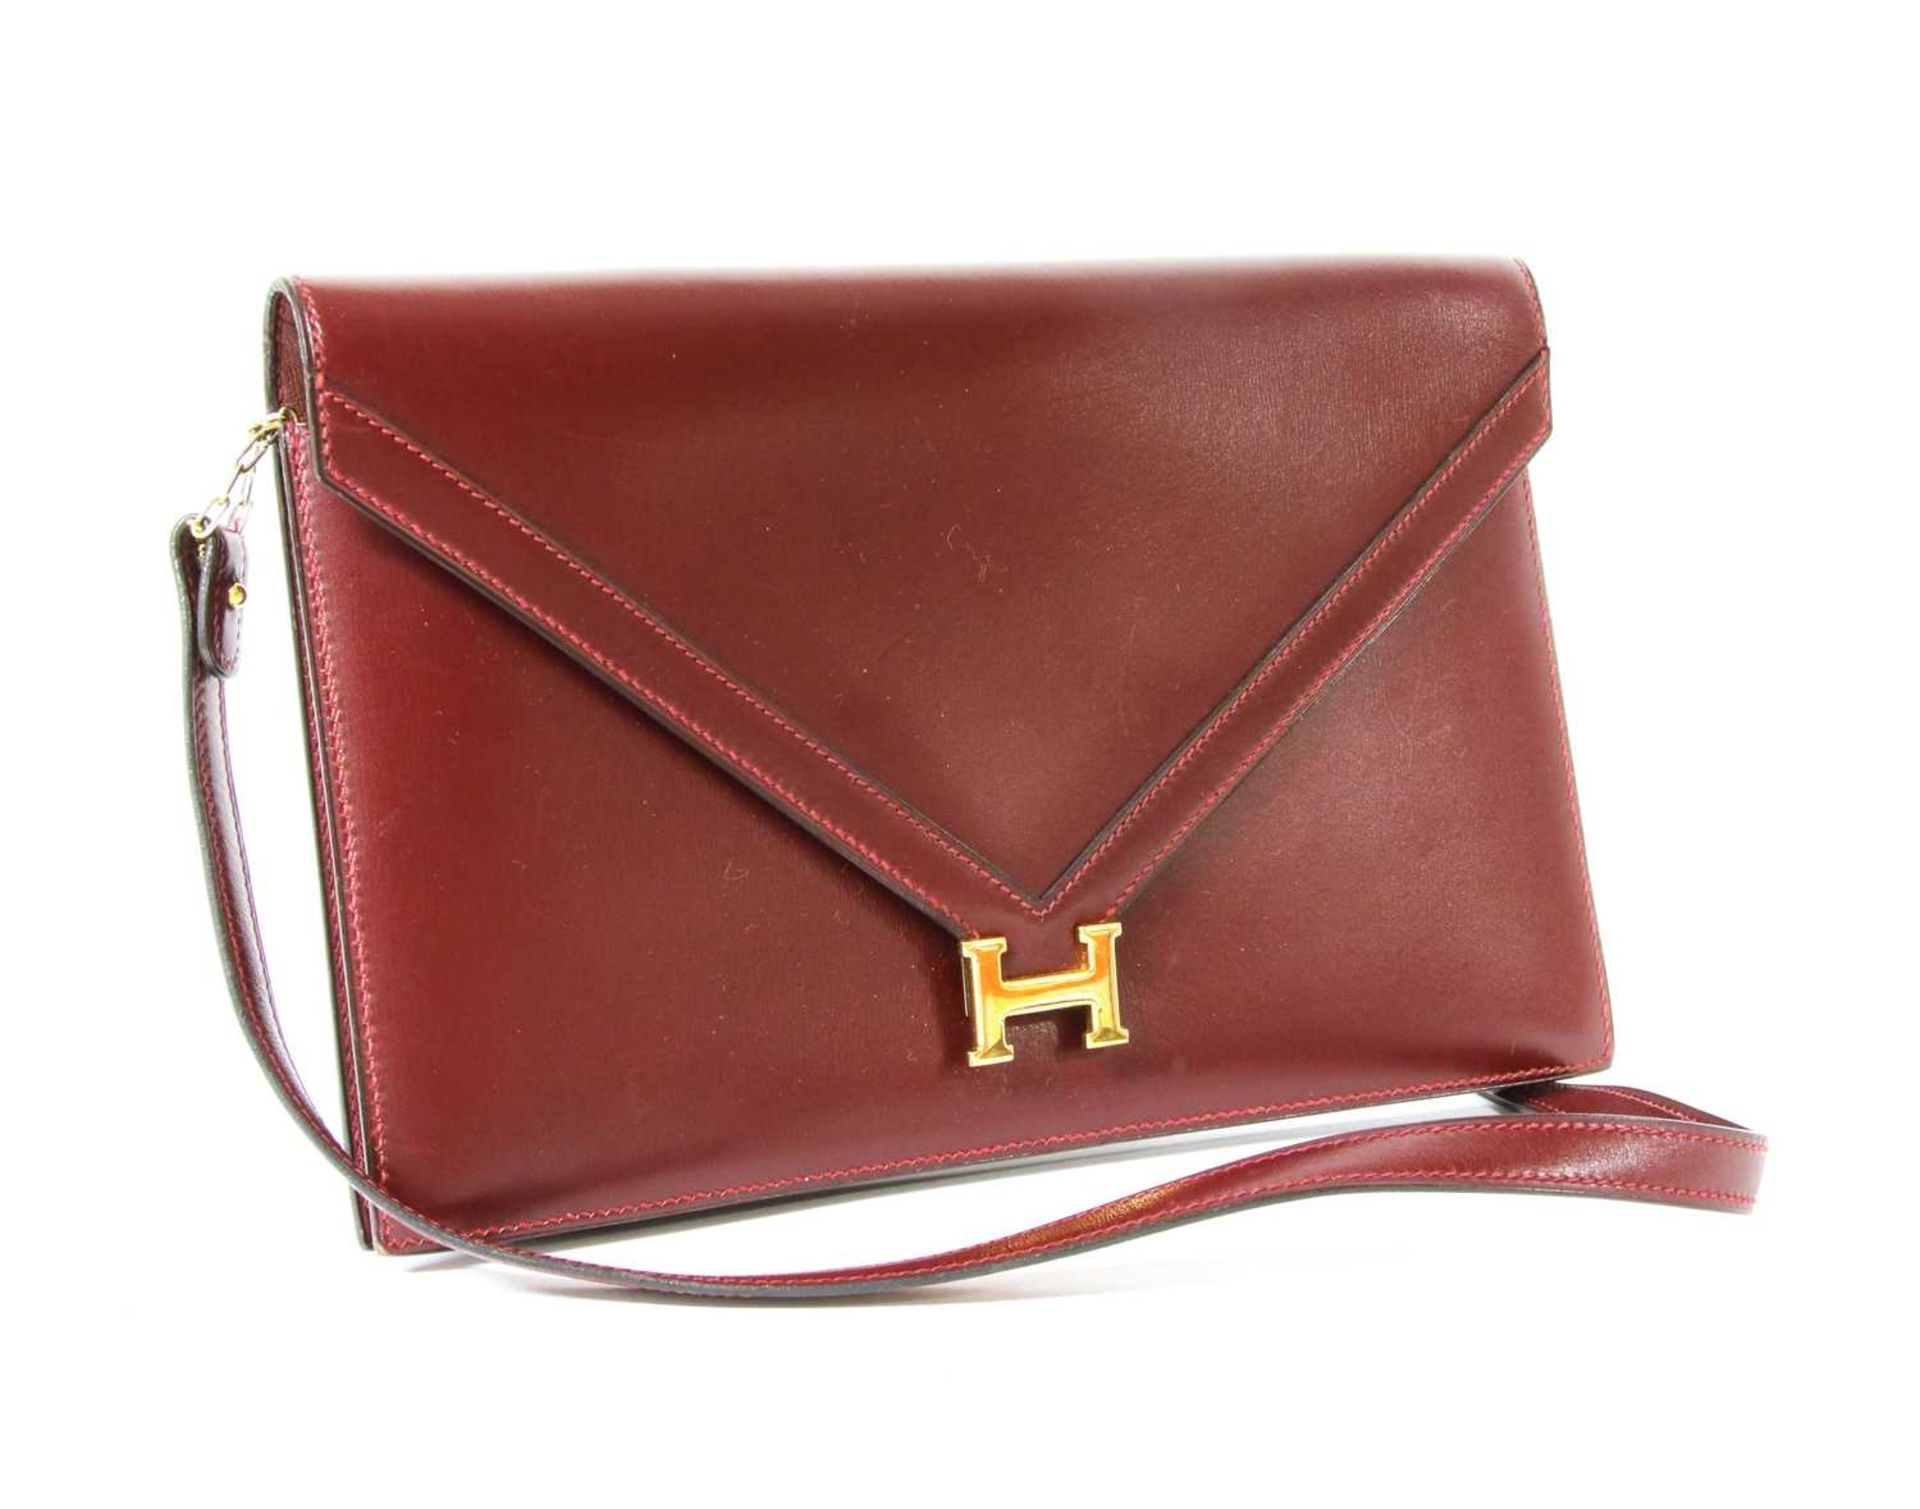 An Hermès 'Lydie' red clutch bag,